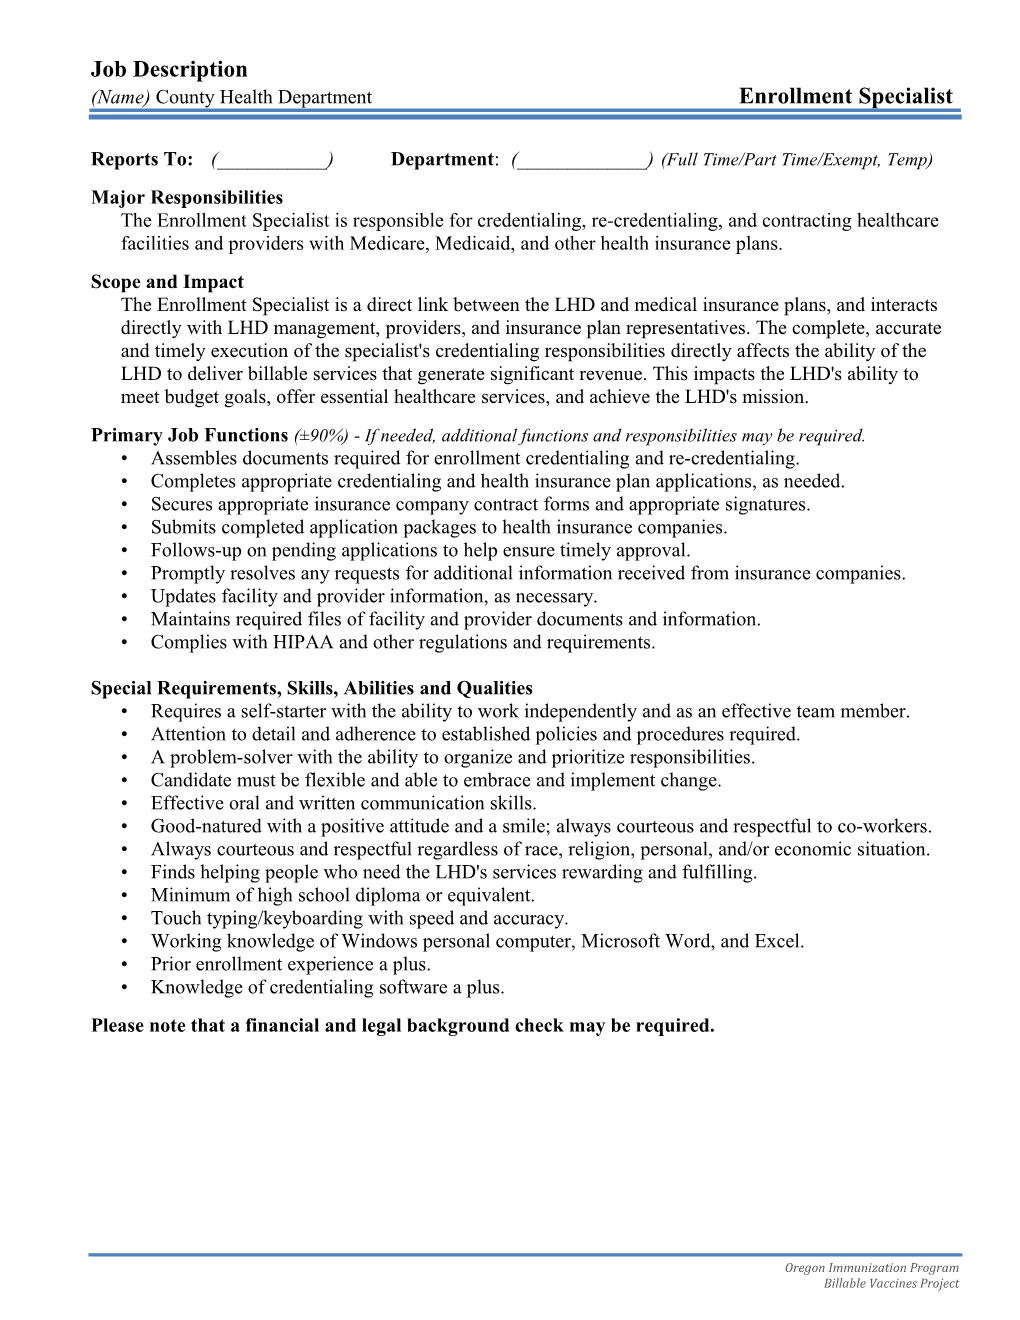 Sample Job Description for LHD Enrollment Specialist (Word)